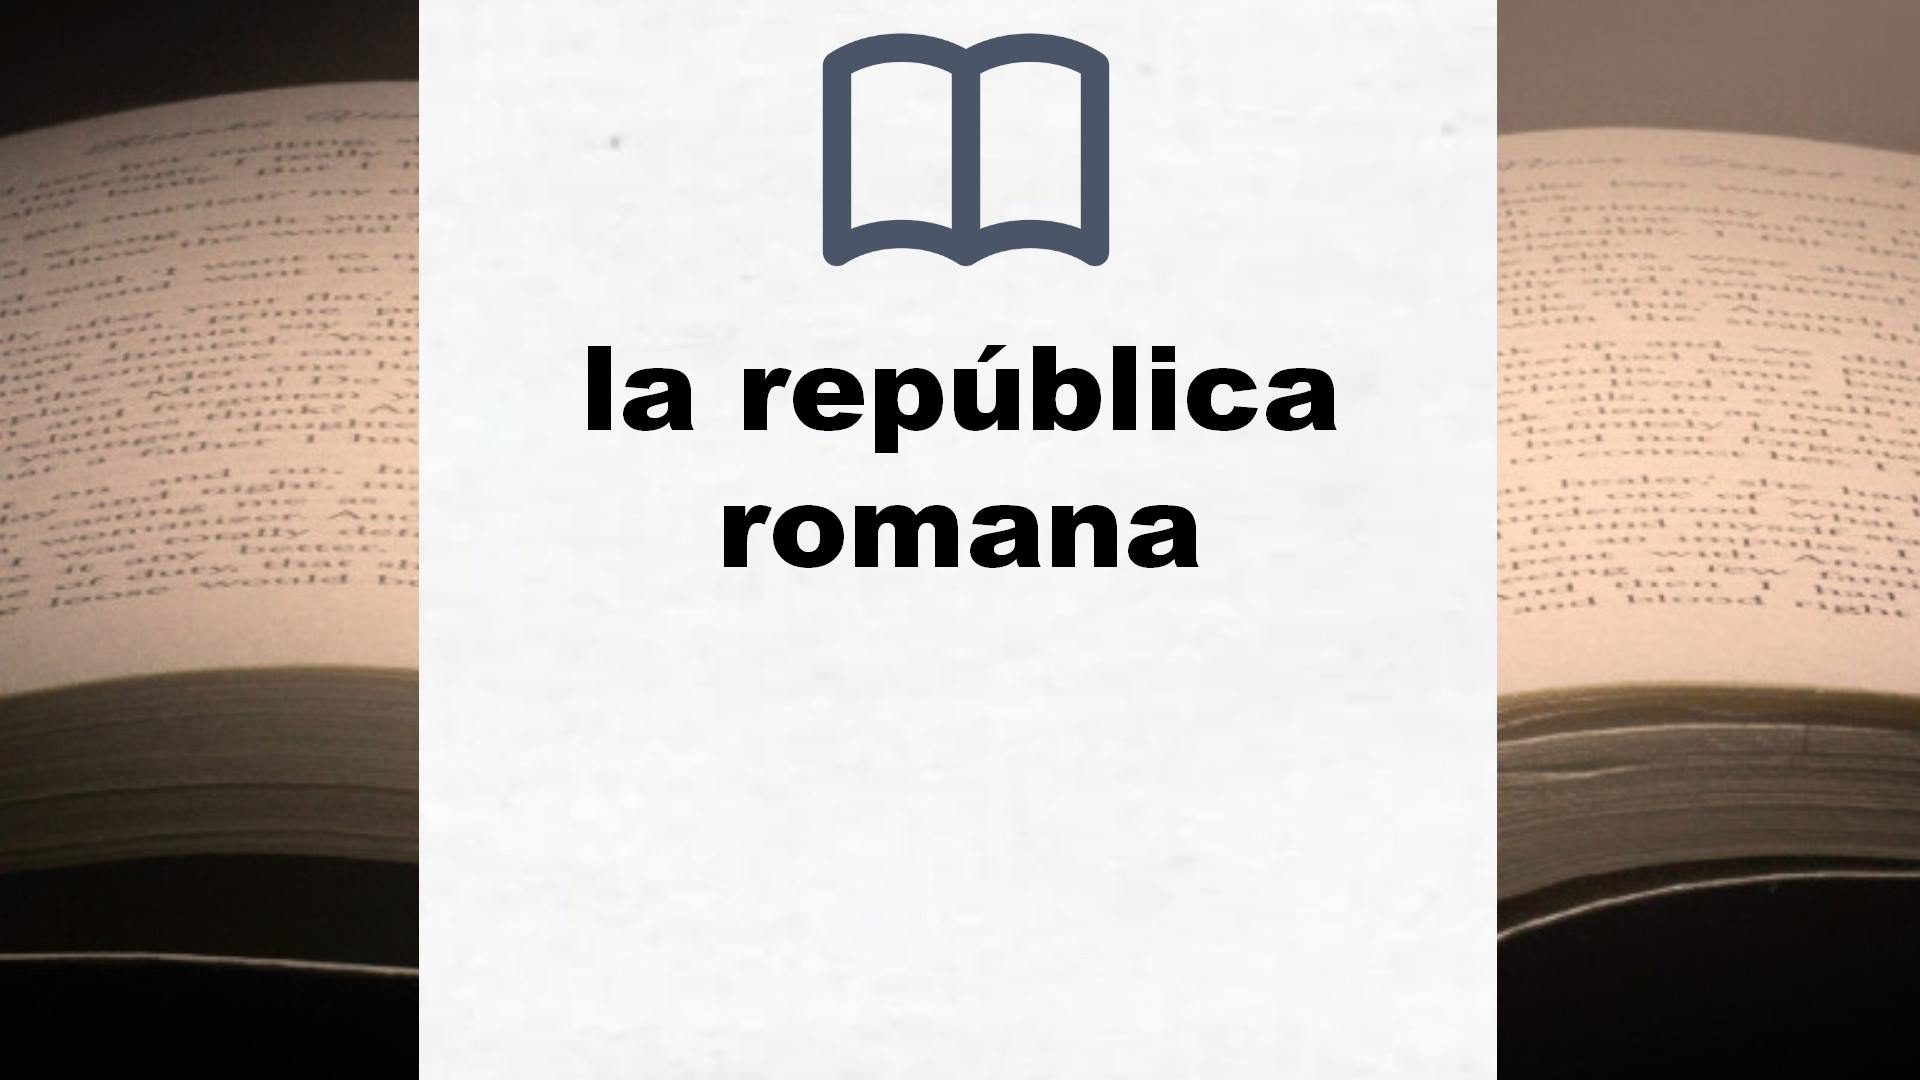 Libros sobre la república romana